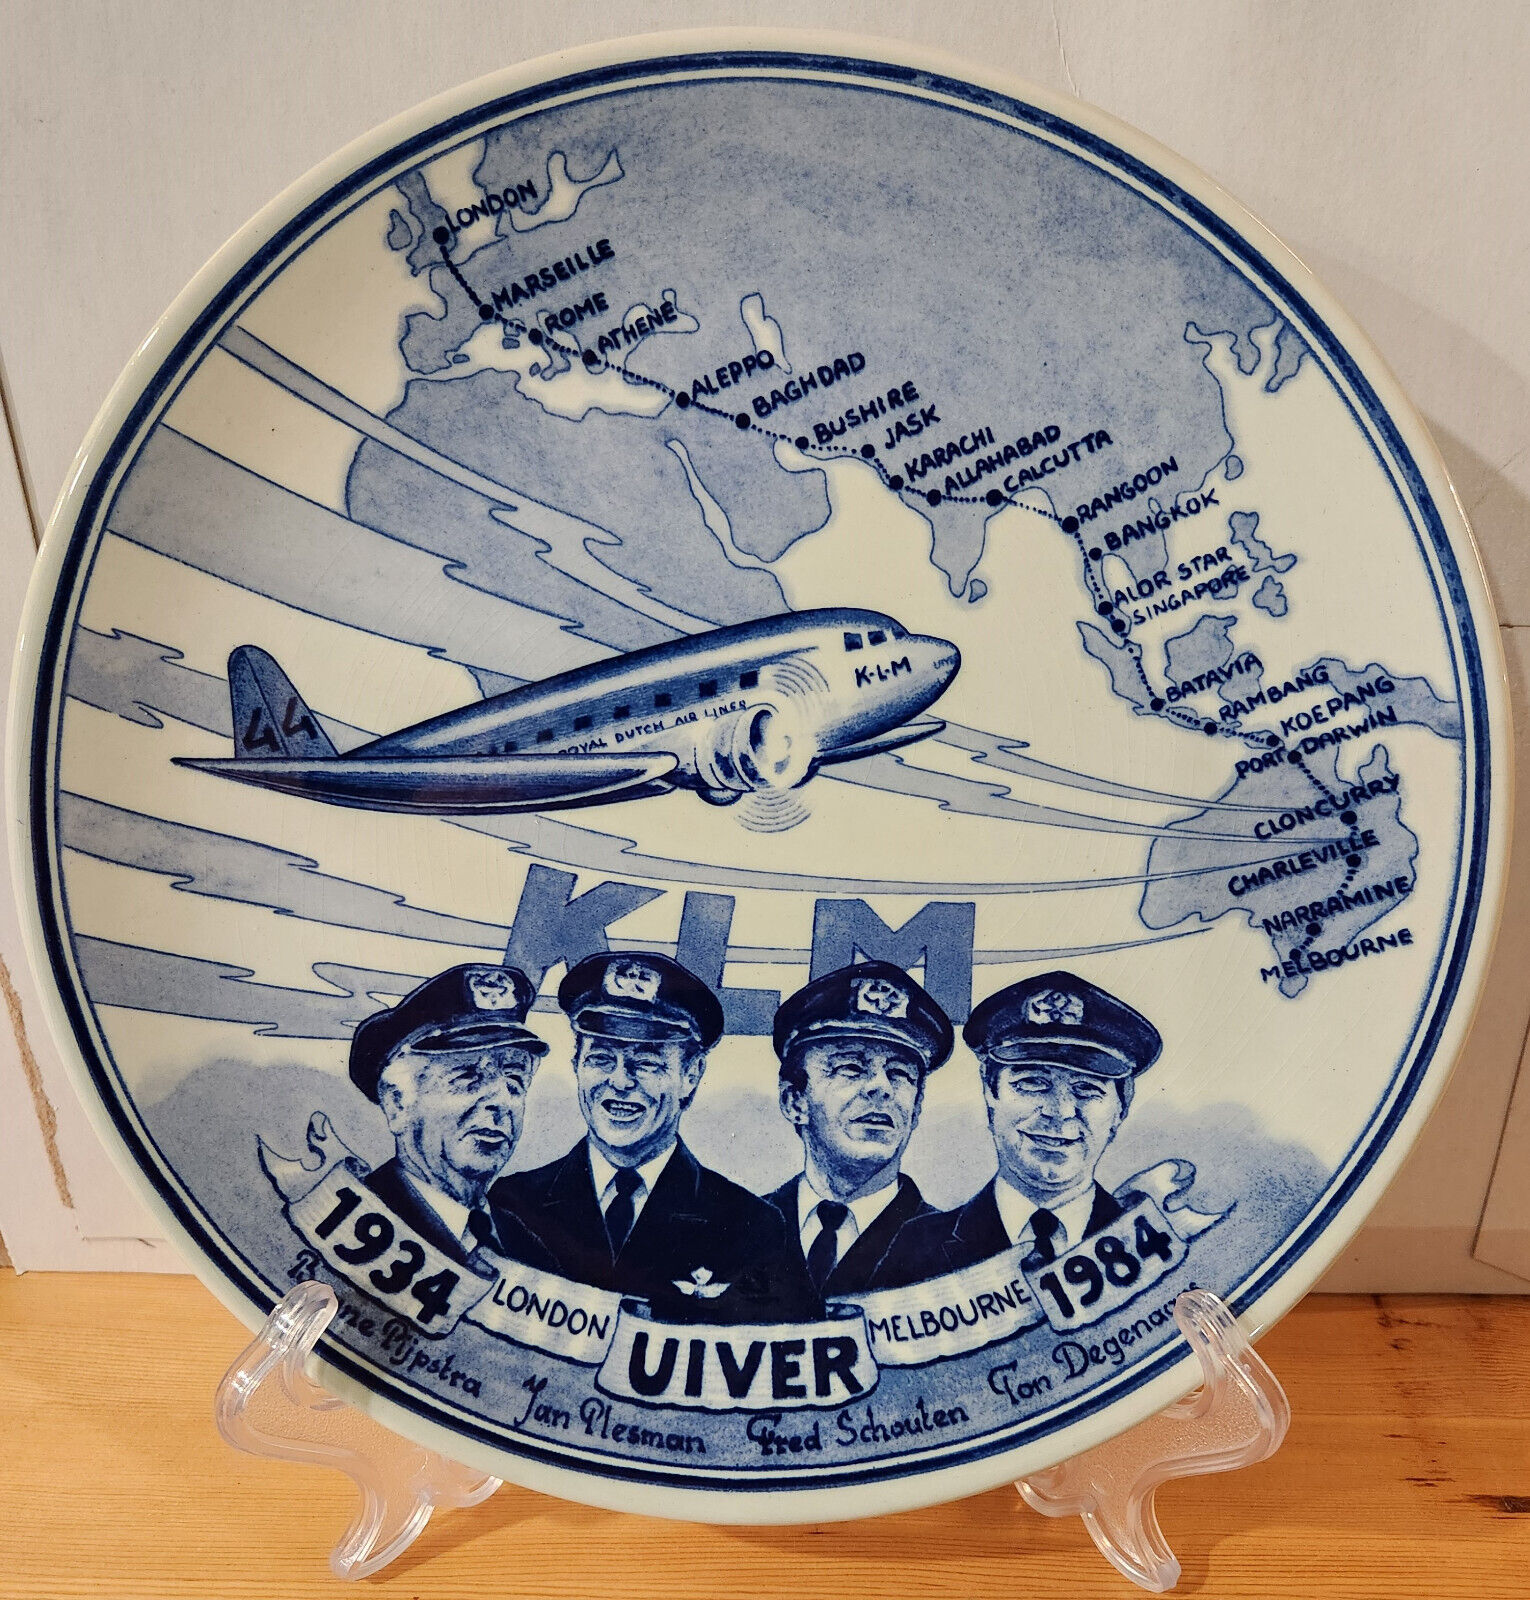 Special Ed. Delft Blue Commemorative Plate KLM Uiver London Melbourne 1934-1984